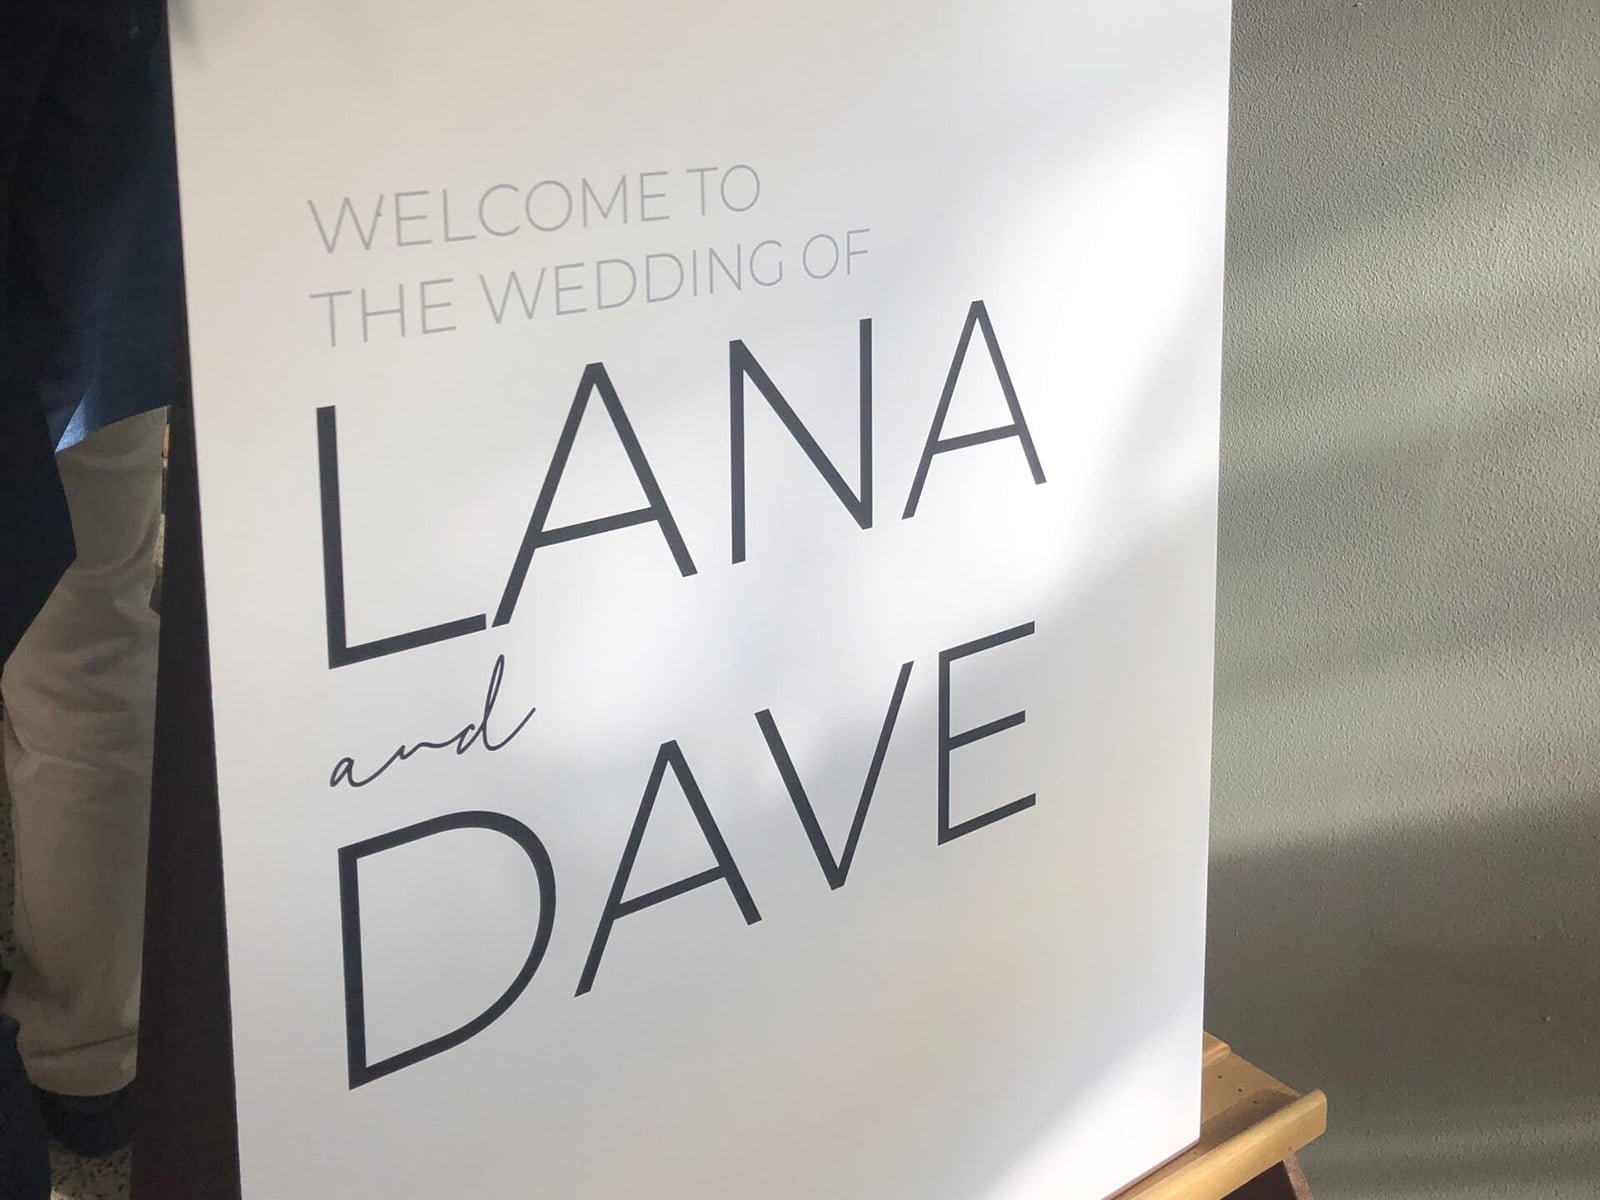 Lana and Dave Wedding - Craig Francis Music Wedding Band Melbourne